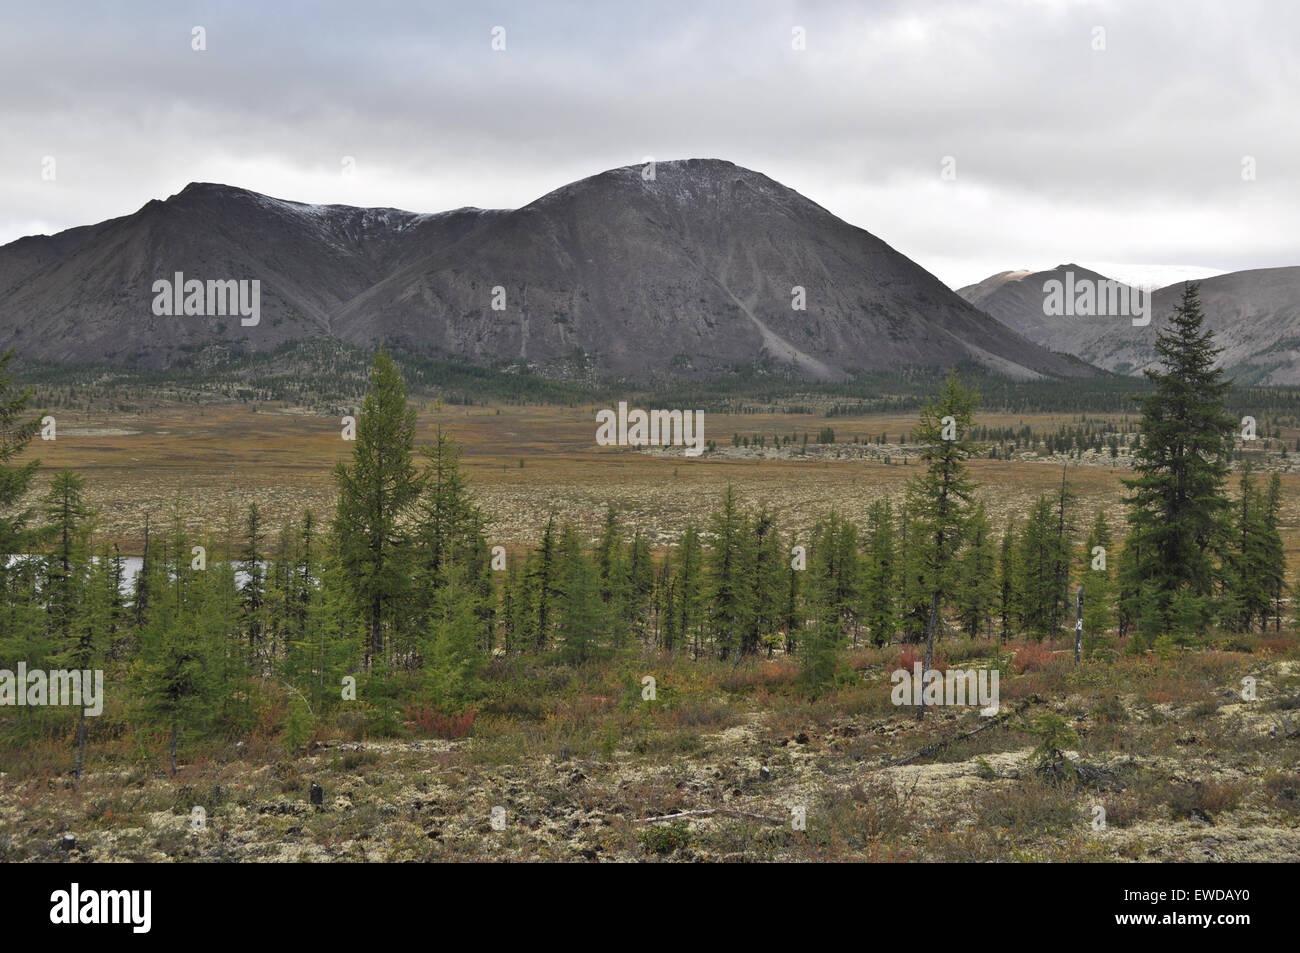 Autumn tundra on the background of mountains in Yakutia. Cloudy landscape in the route area 'Kolyma', Yakutsk - Magadan. Russia. Stock Photo